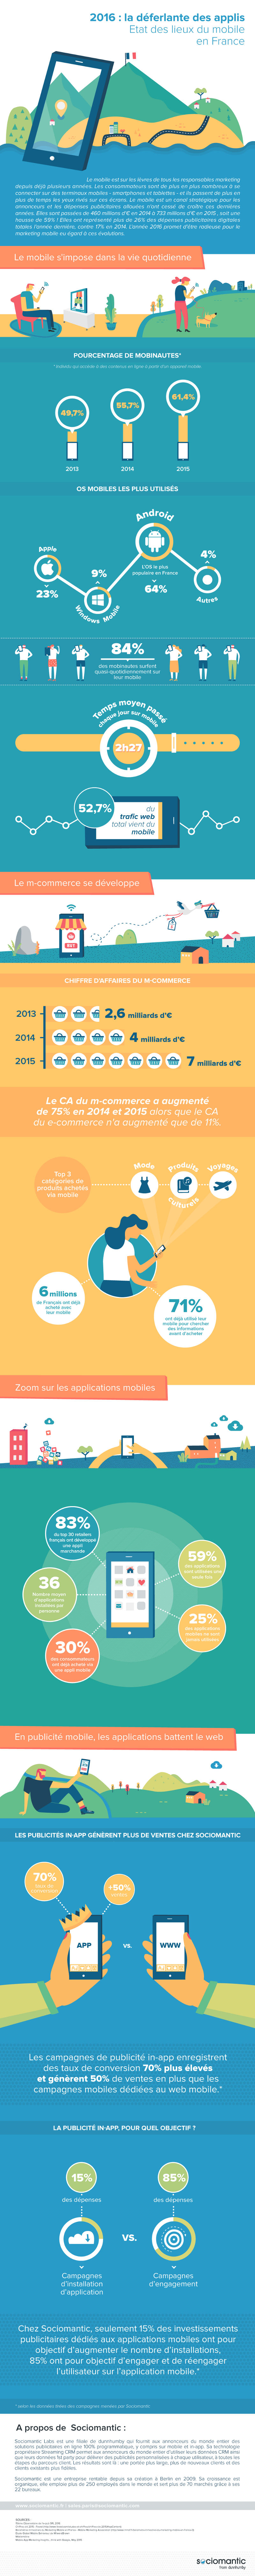 infographie_chiffres_mobile-app_France_2016